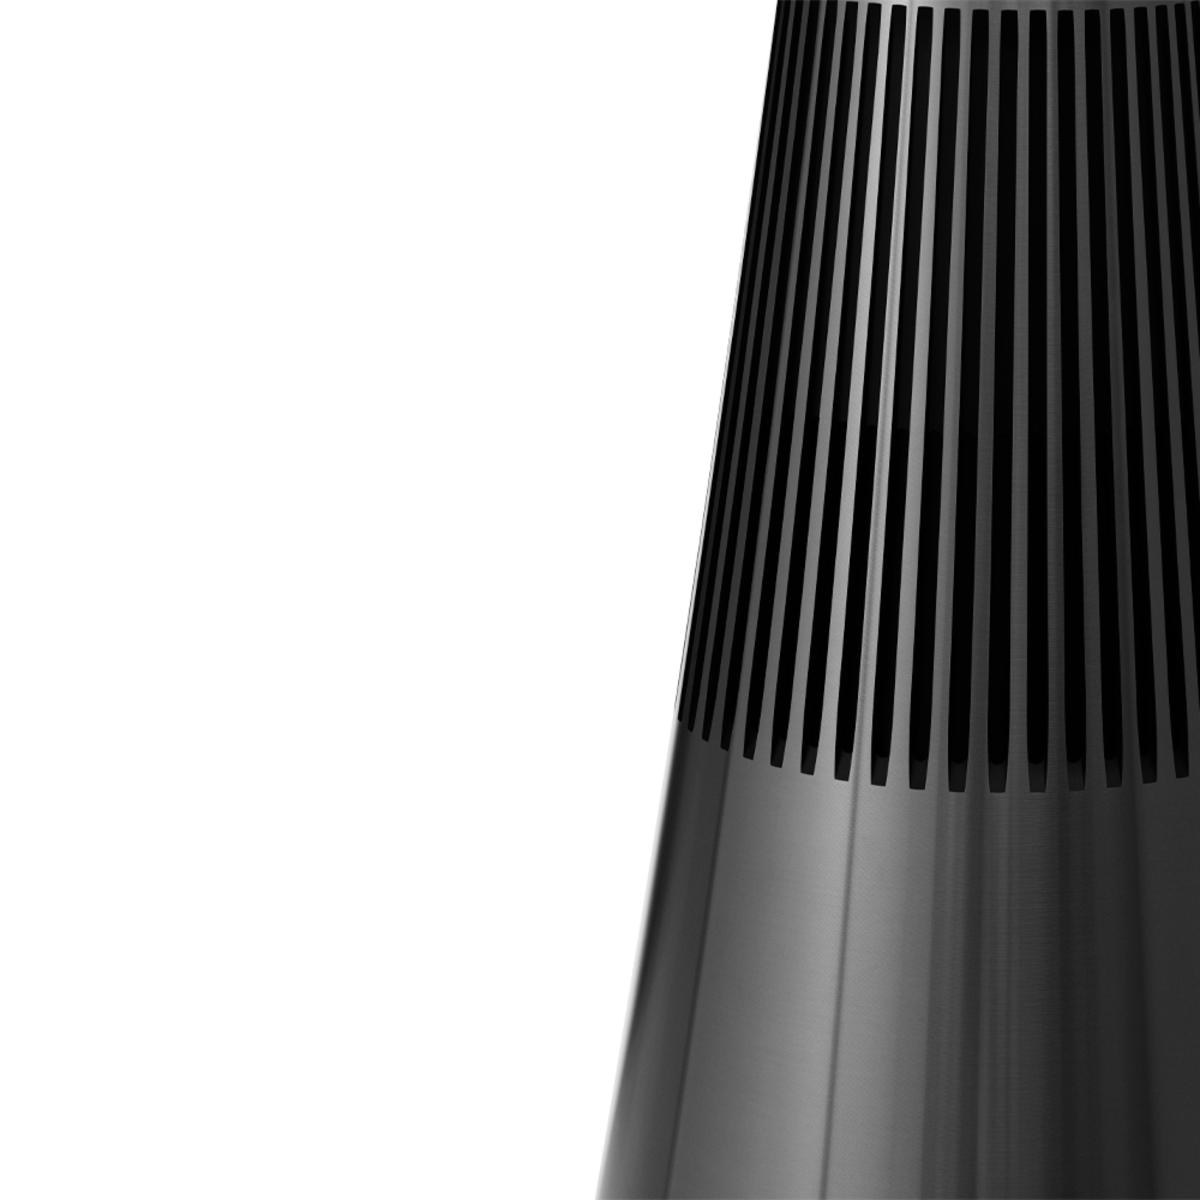 Beosound 2 wireless speaker in silver - Bang Olufsen